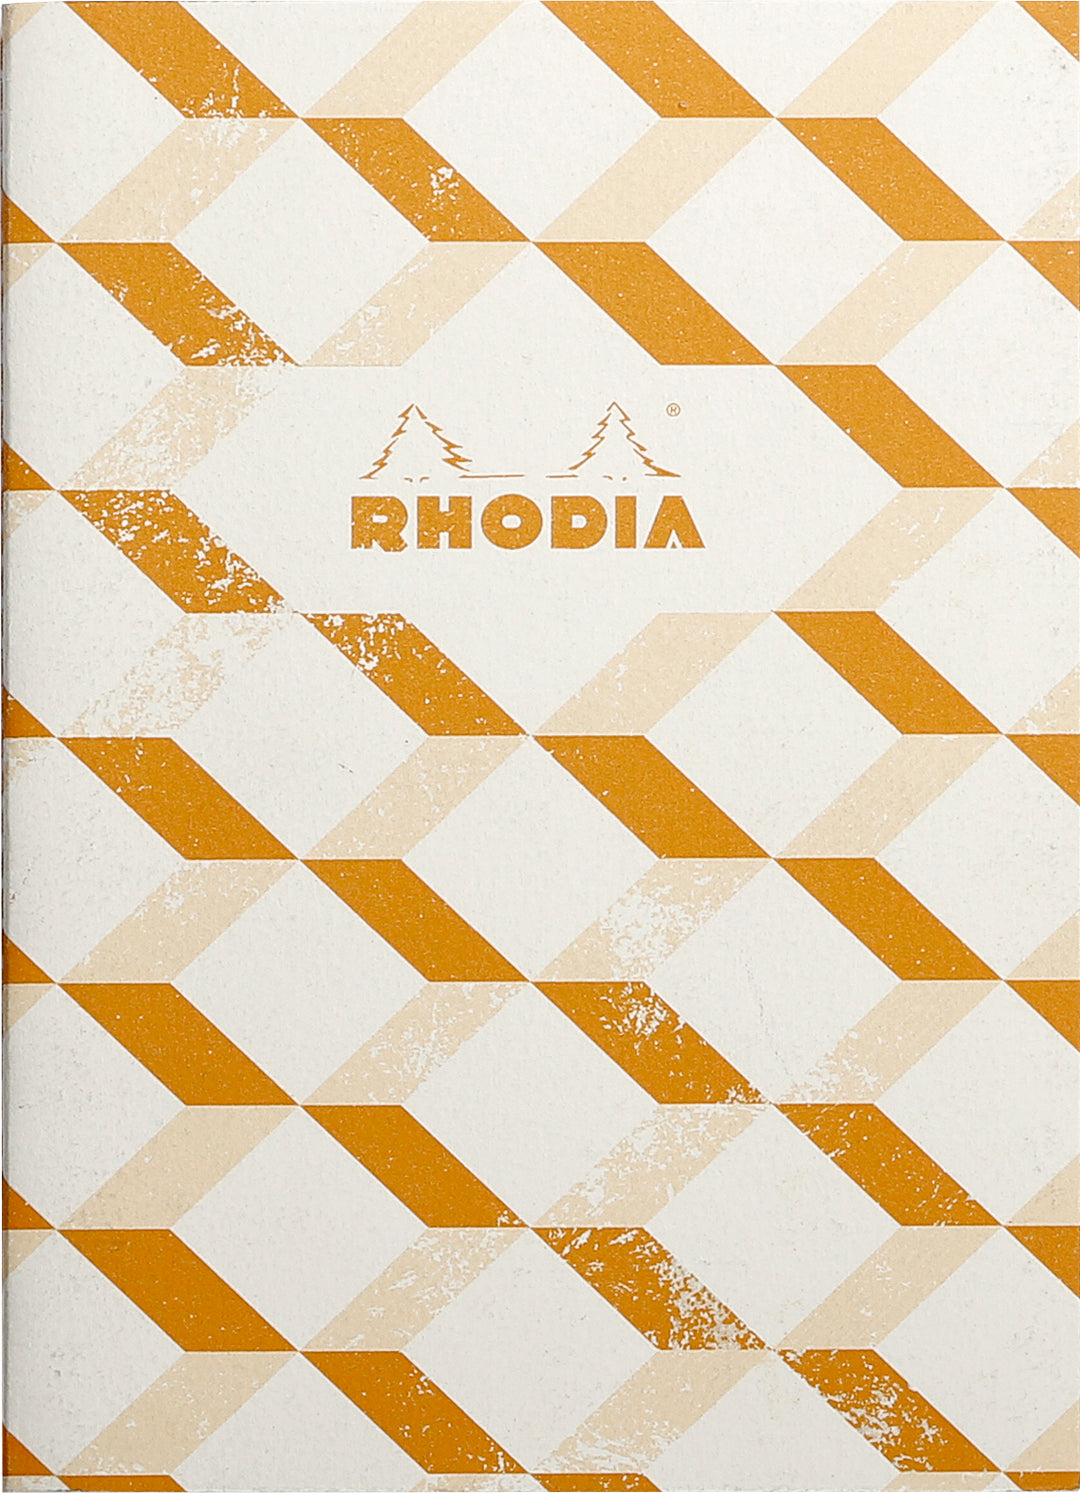 Rhodia Heritage White Escher Sewn Line Ruled Notebook